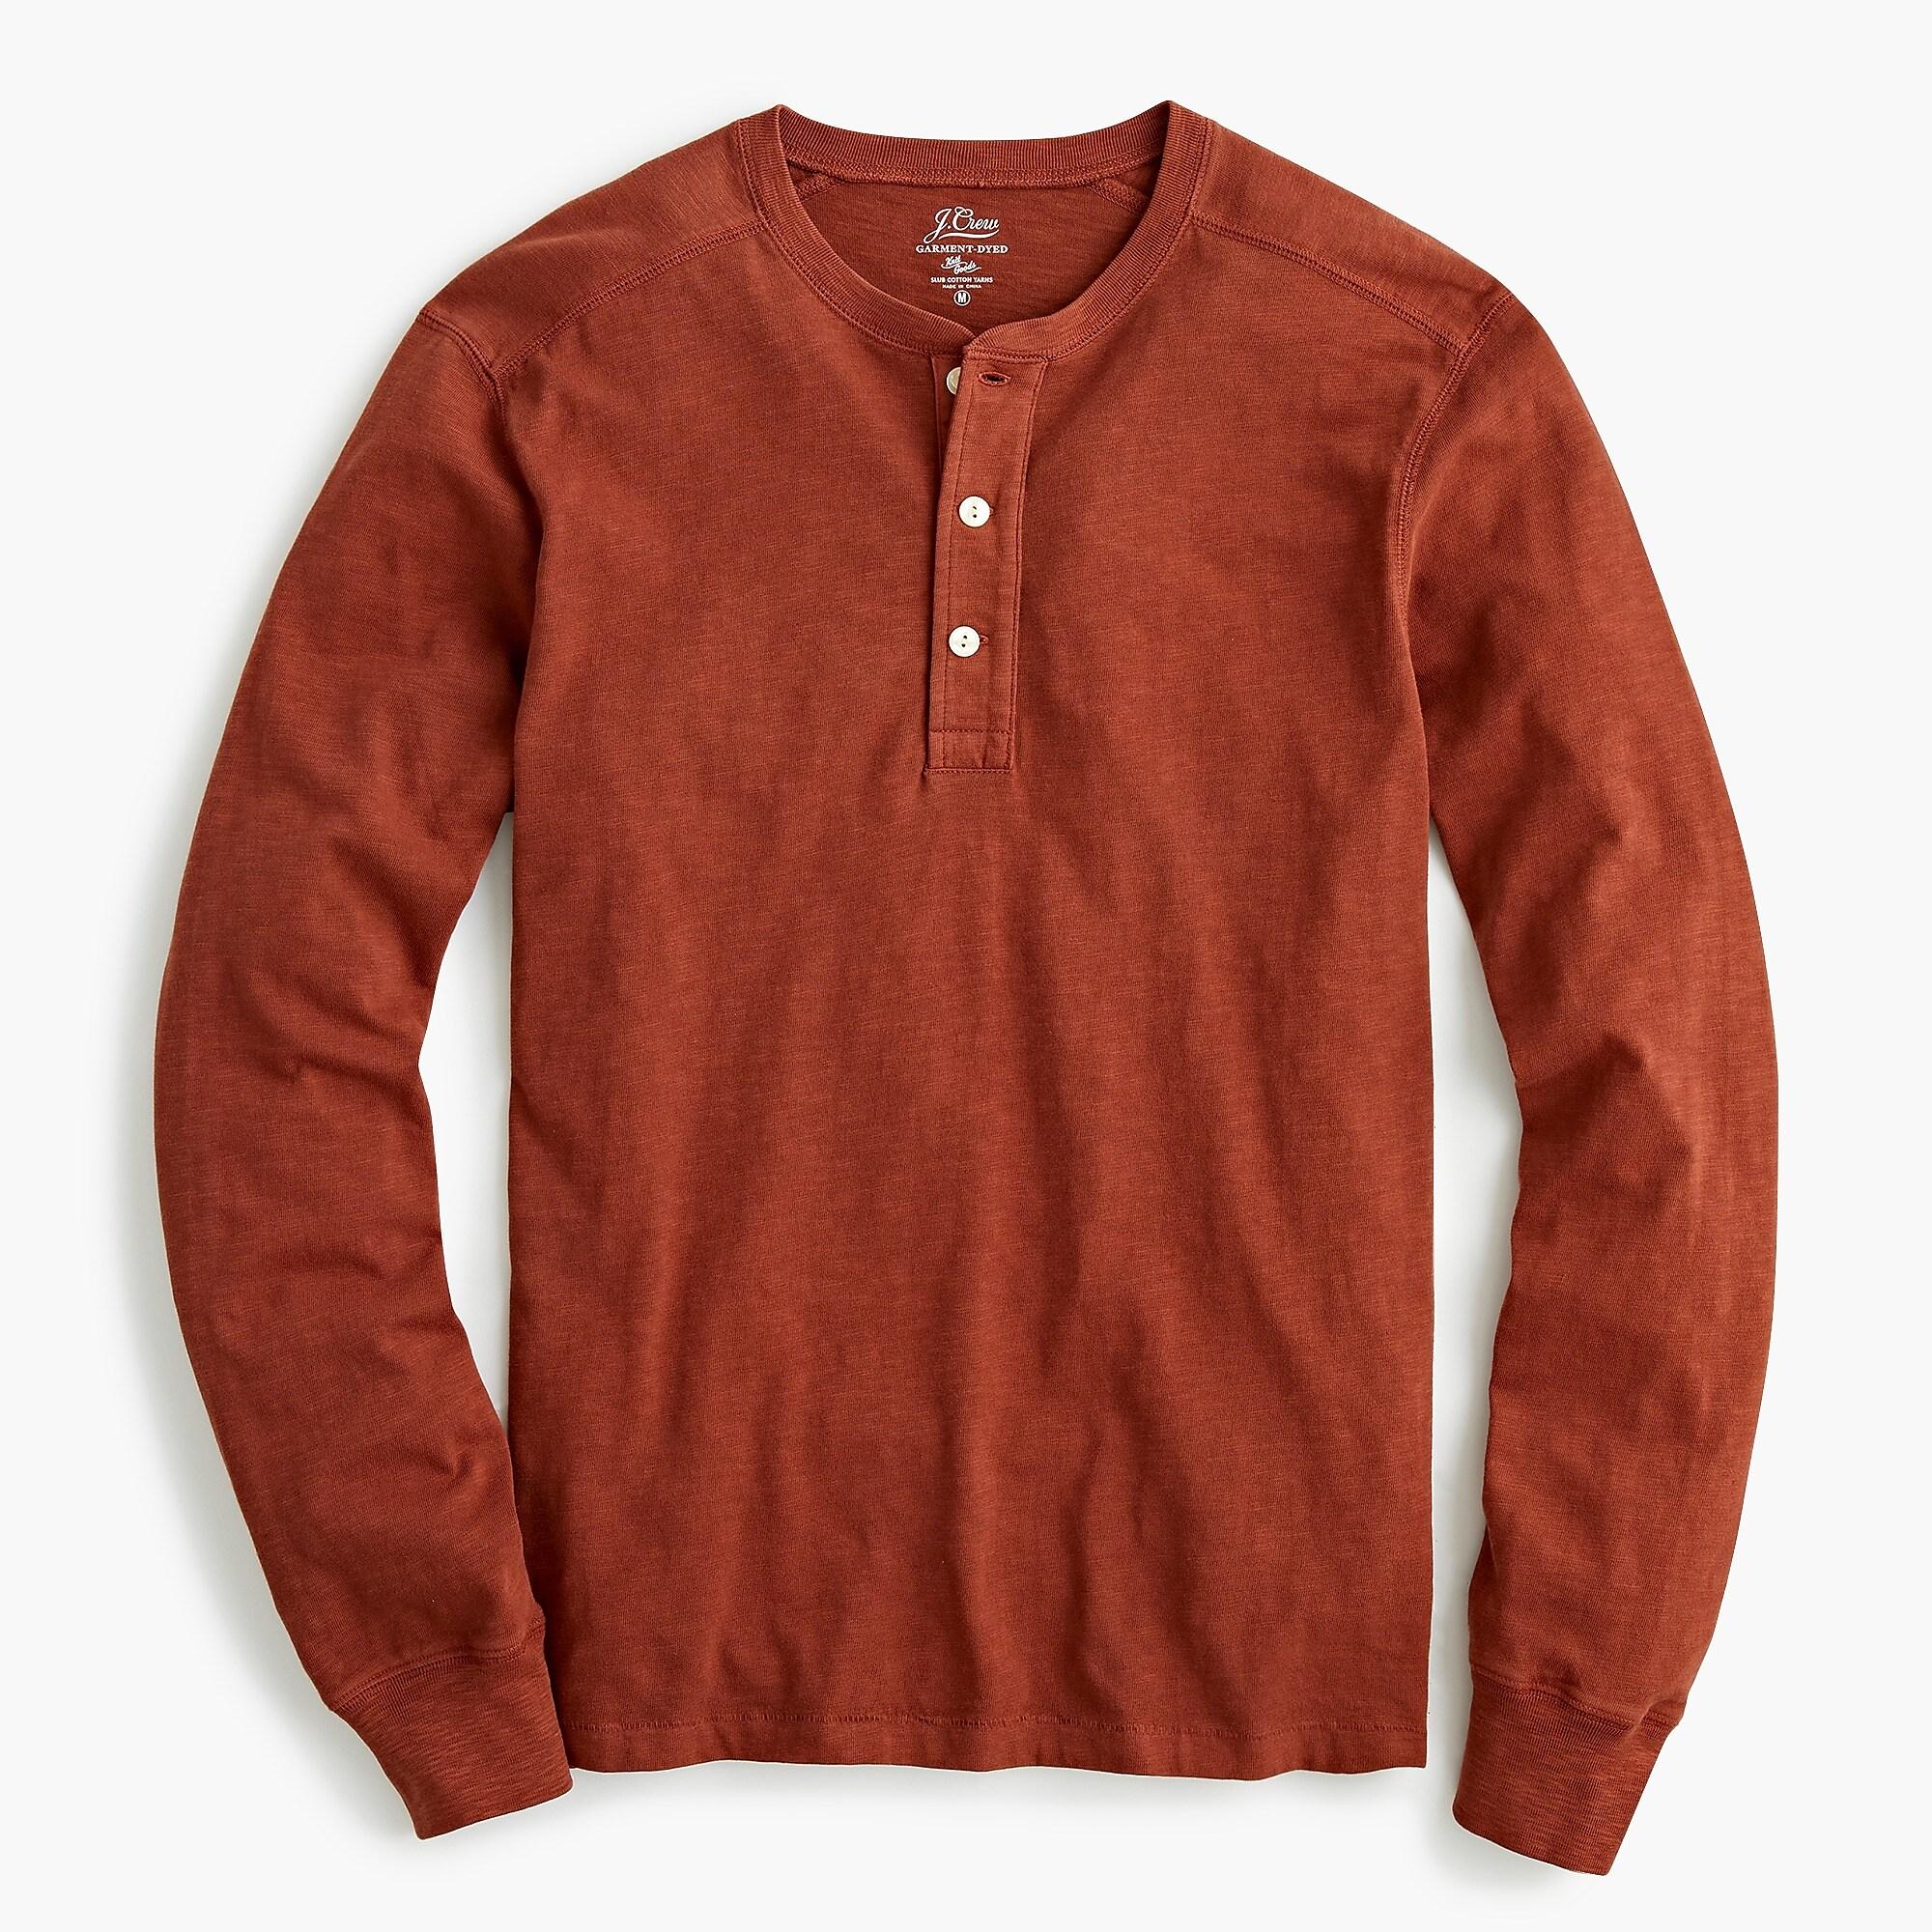 J.Crew Garment-dyed Slub Cotton Henley in Red for Men - Lyst